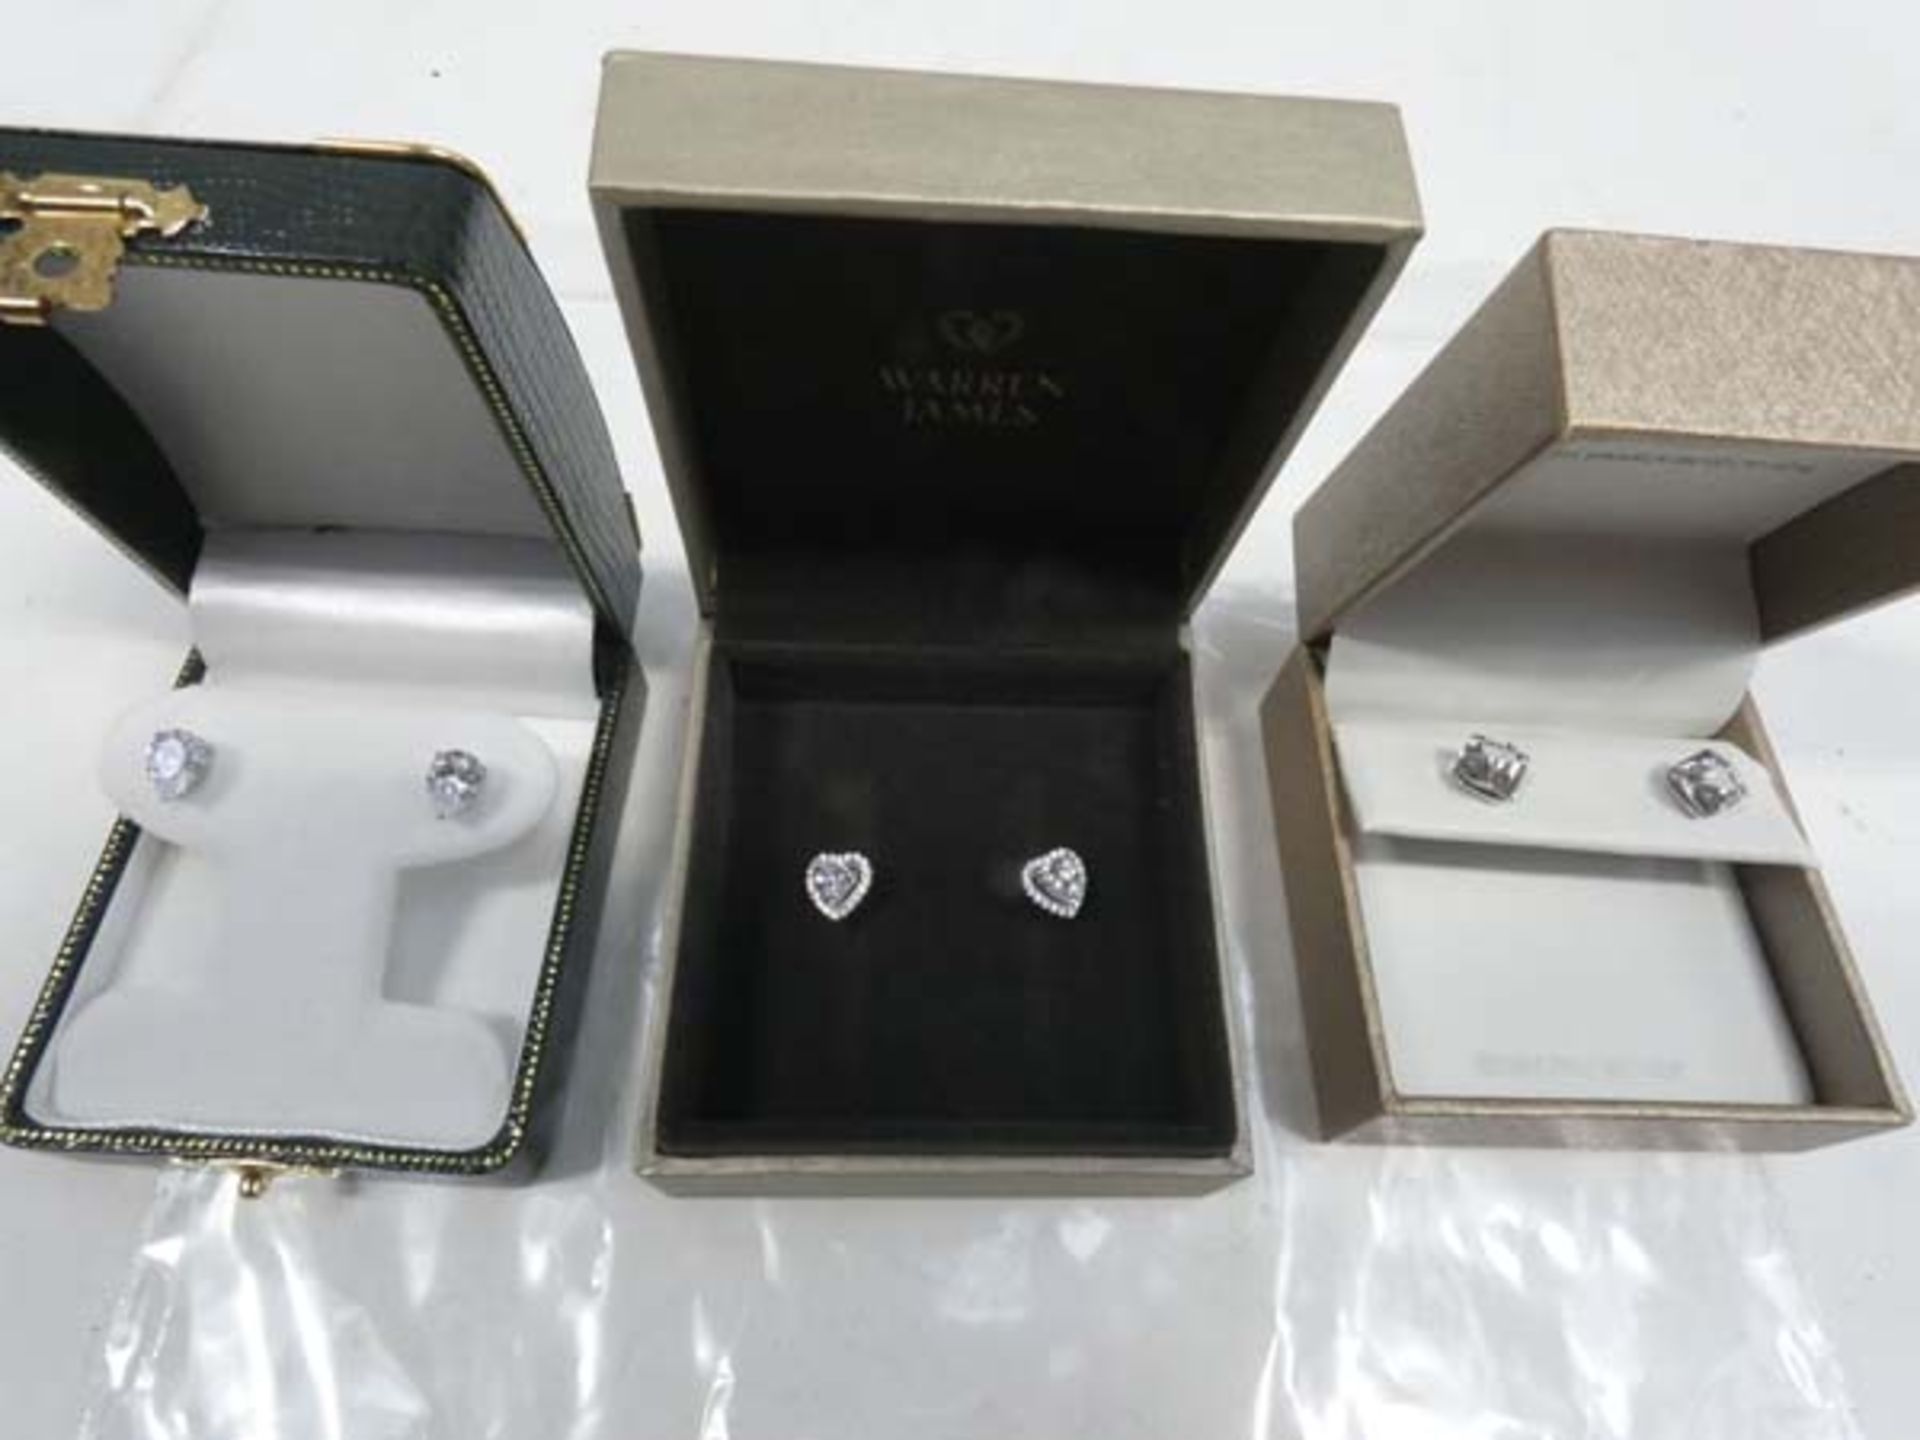 3x pairs of boxed earrings